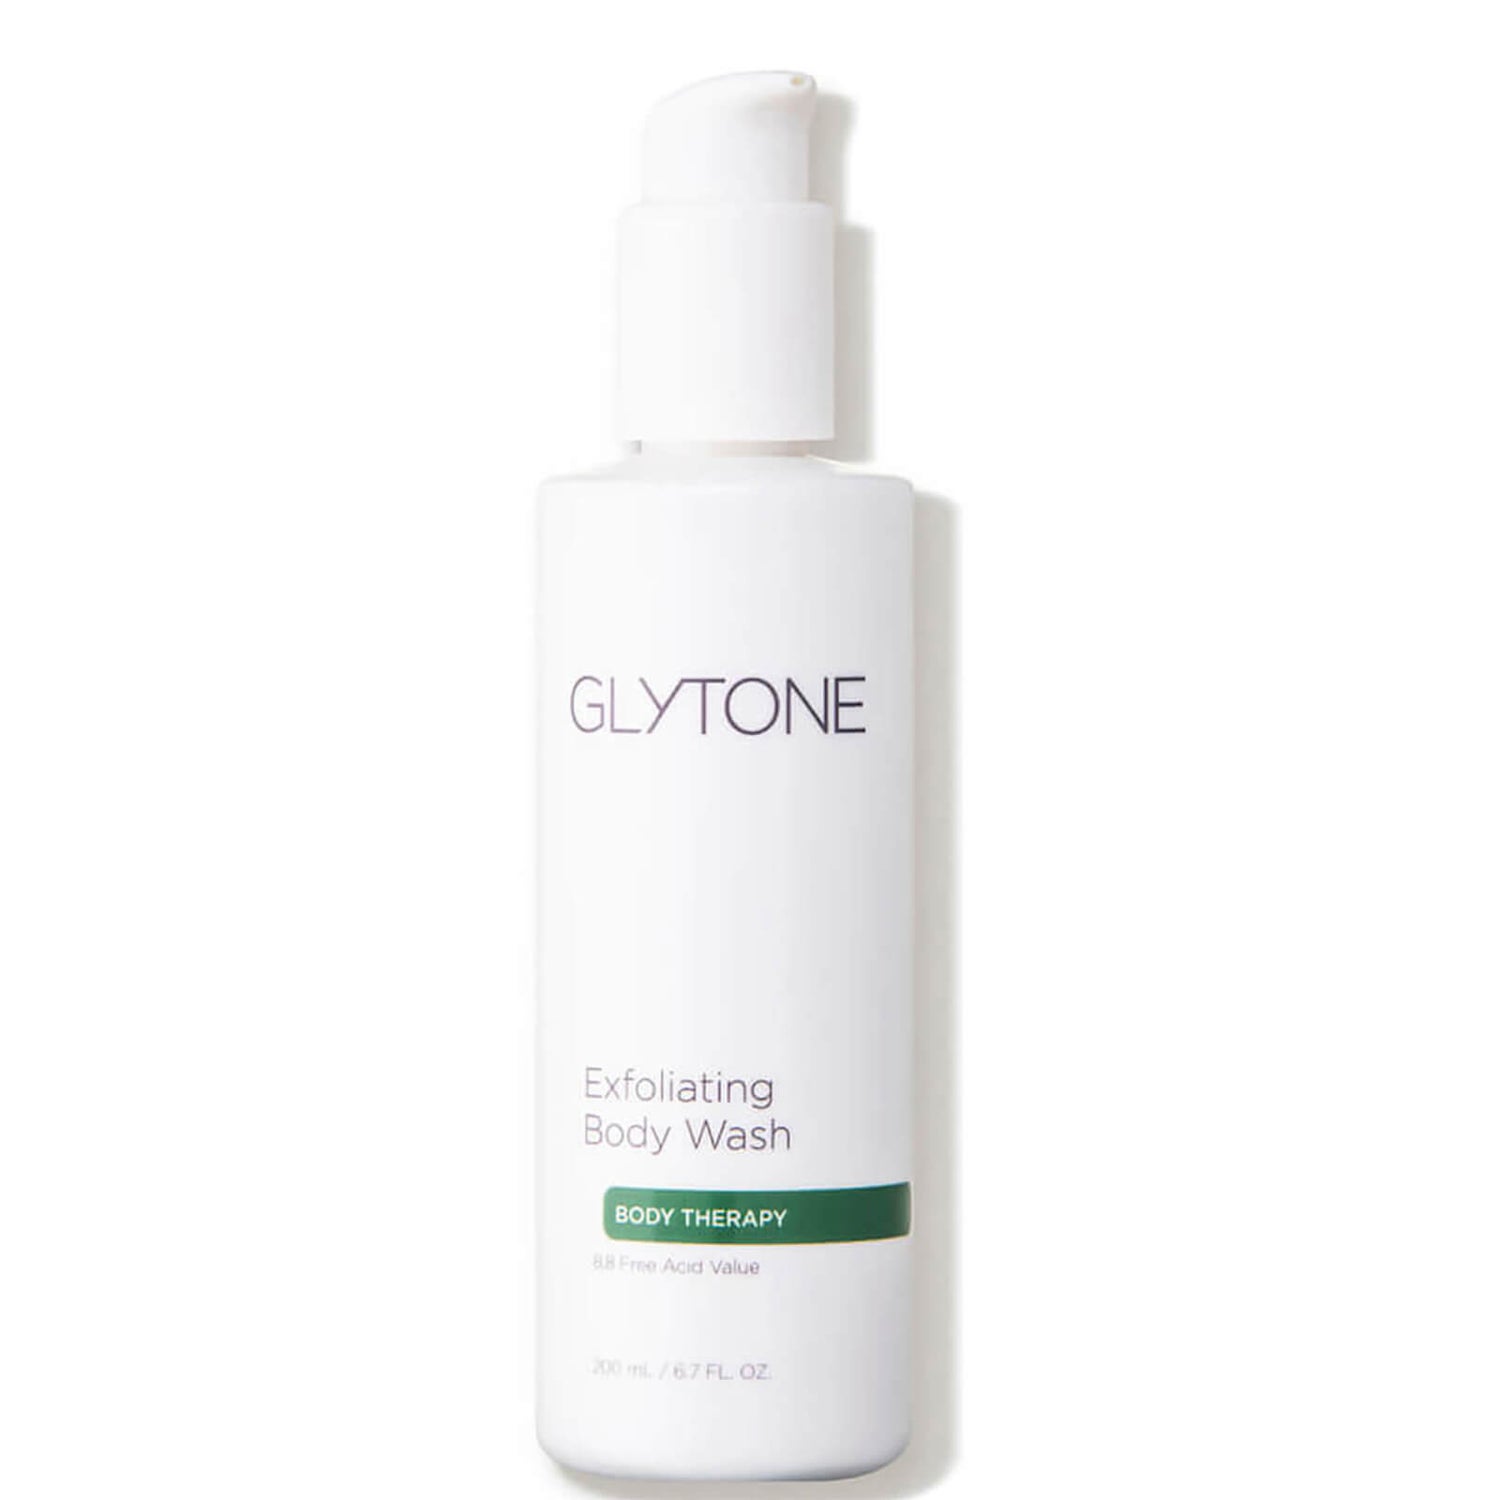 Glytone Exfoliating Body Wash (6.7 fl. oz.)